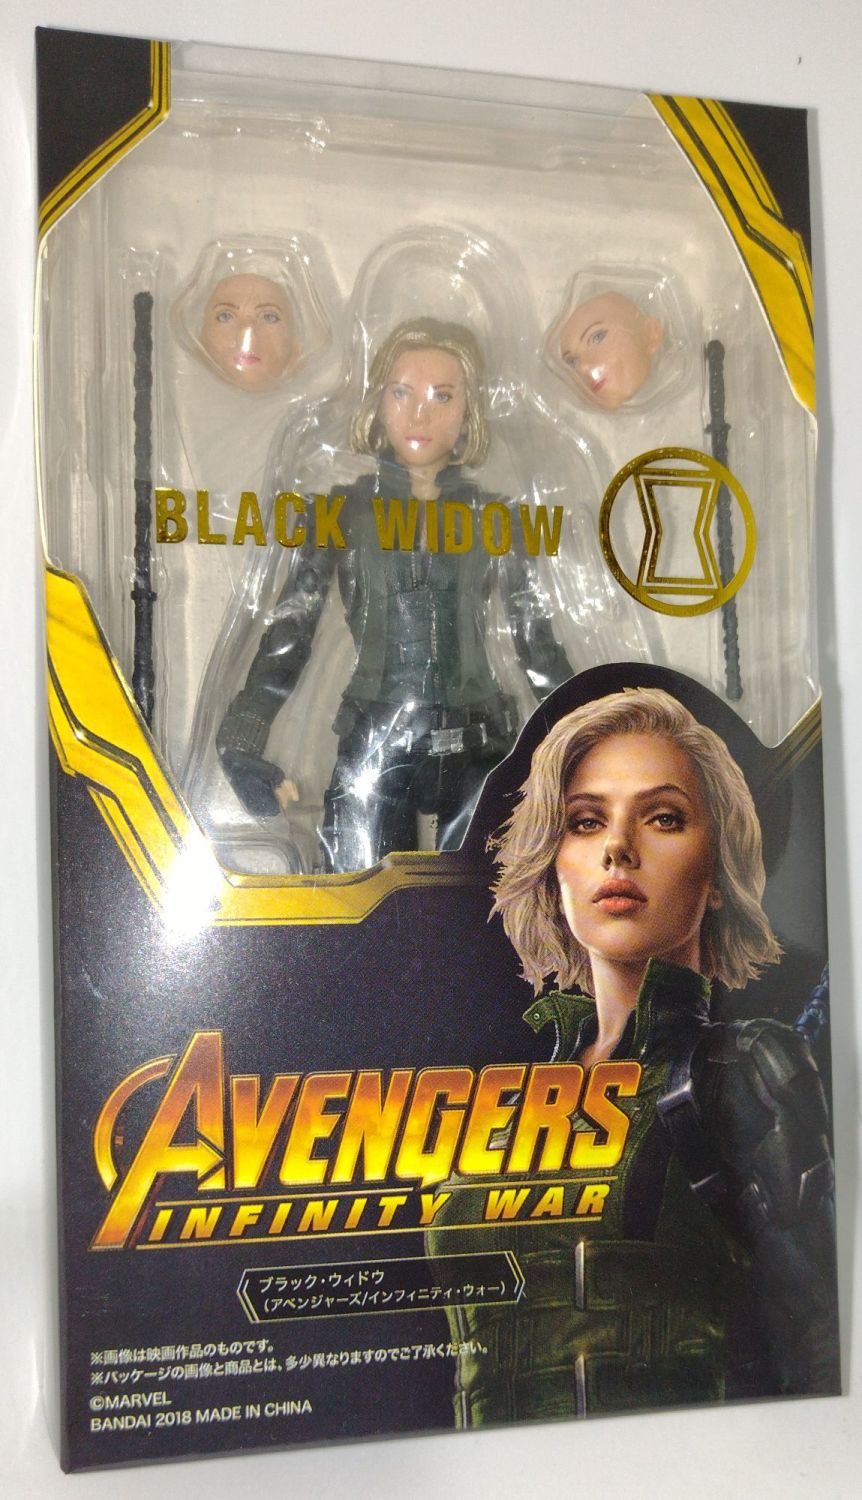 Avengers Infinity War S.H. Figuarts Black Widow Collectable Figure